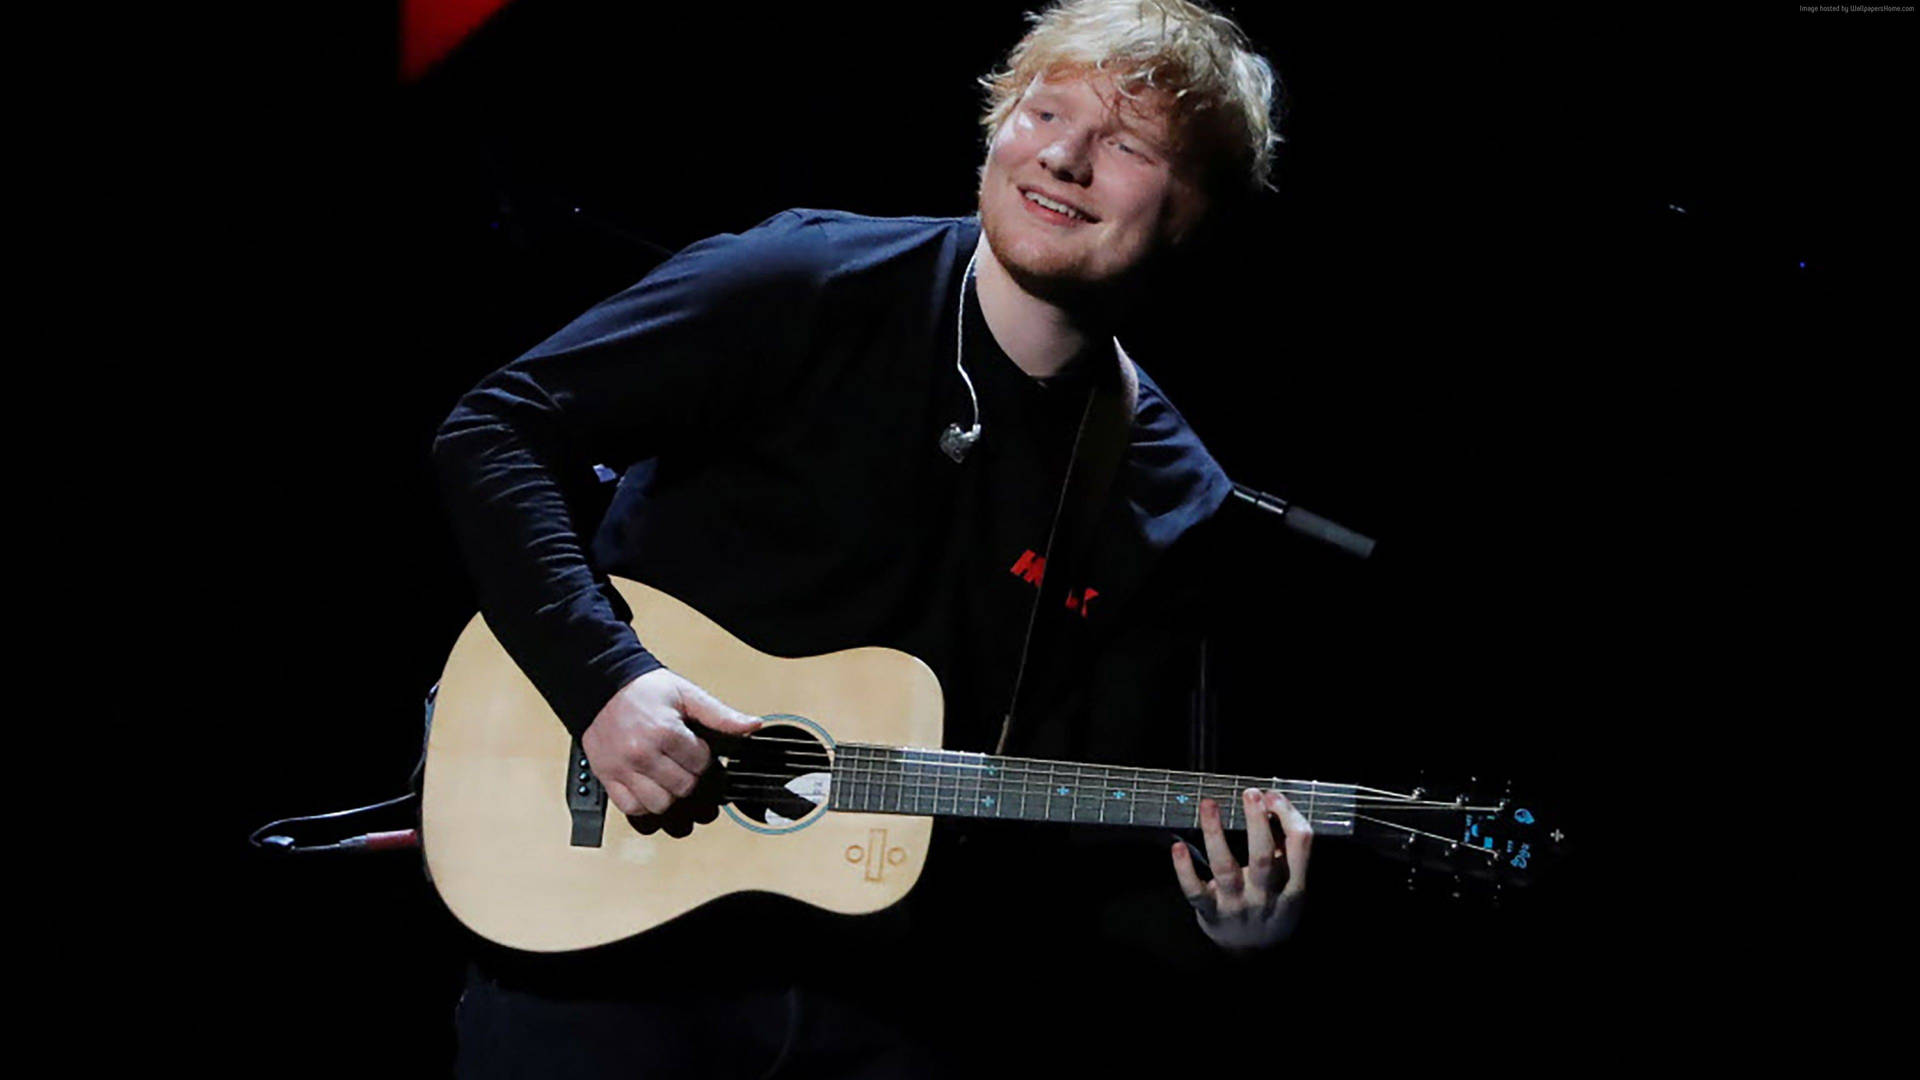 Ed Sheeran singing with delight. Wallpaper